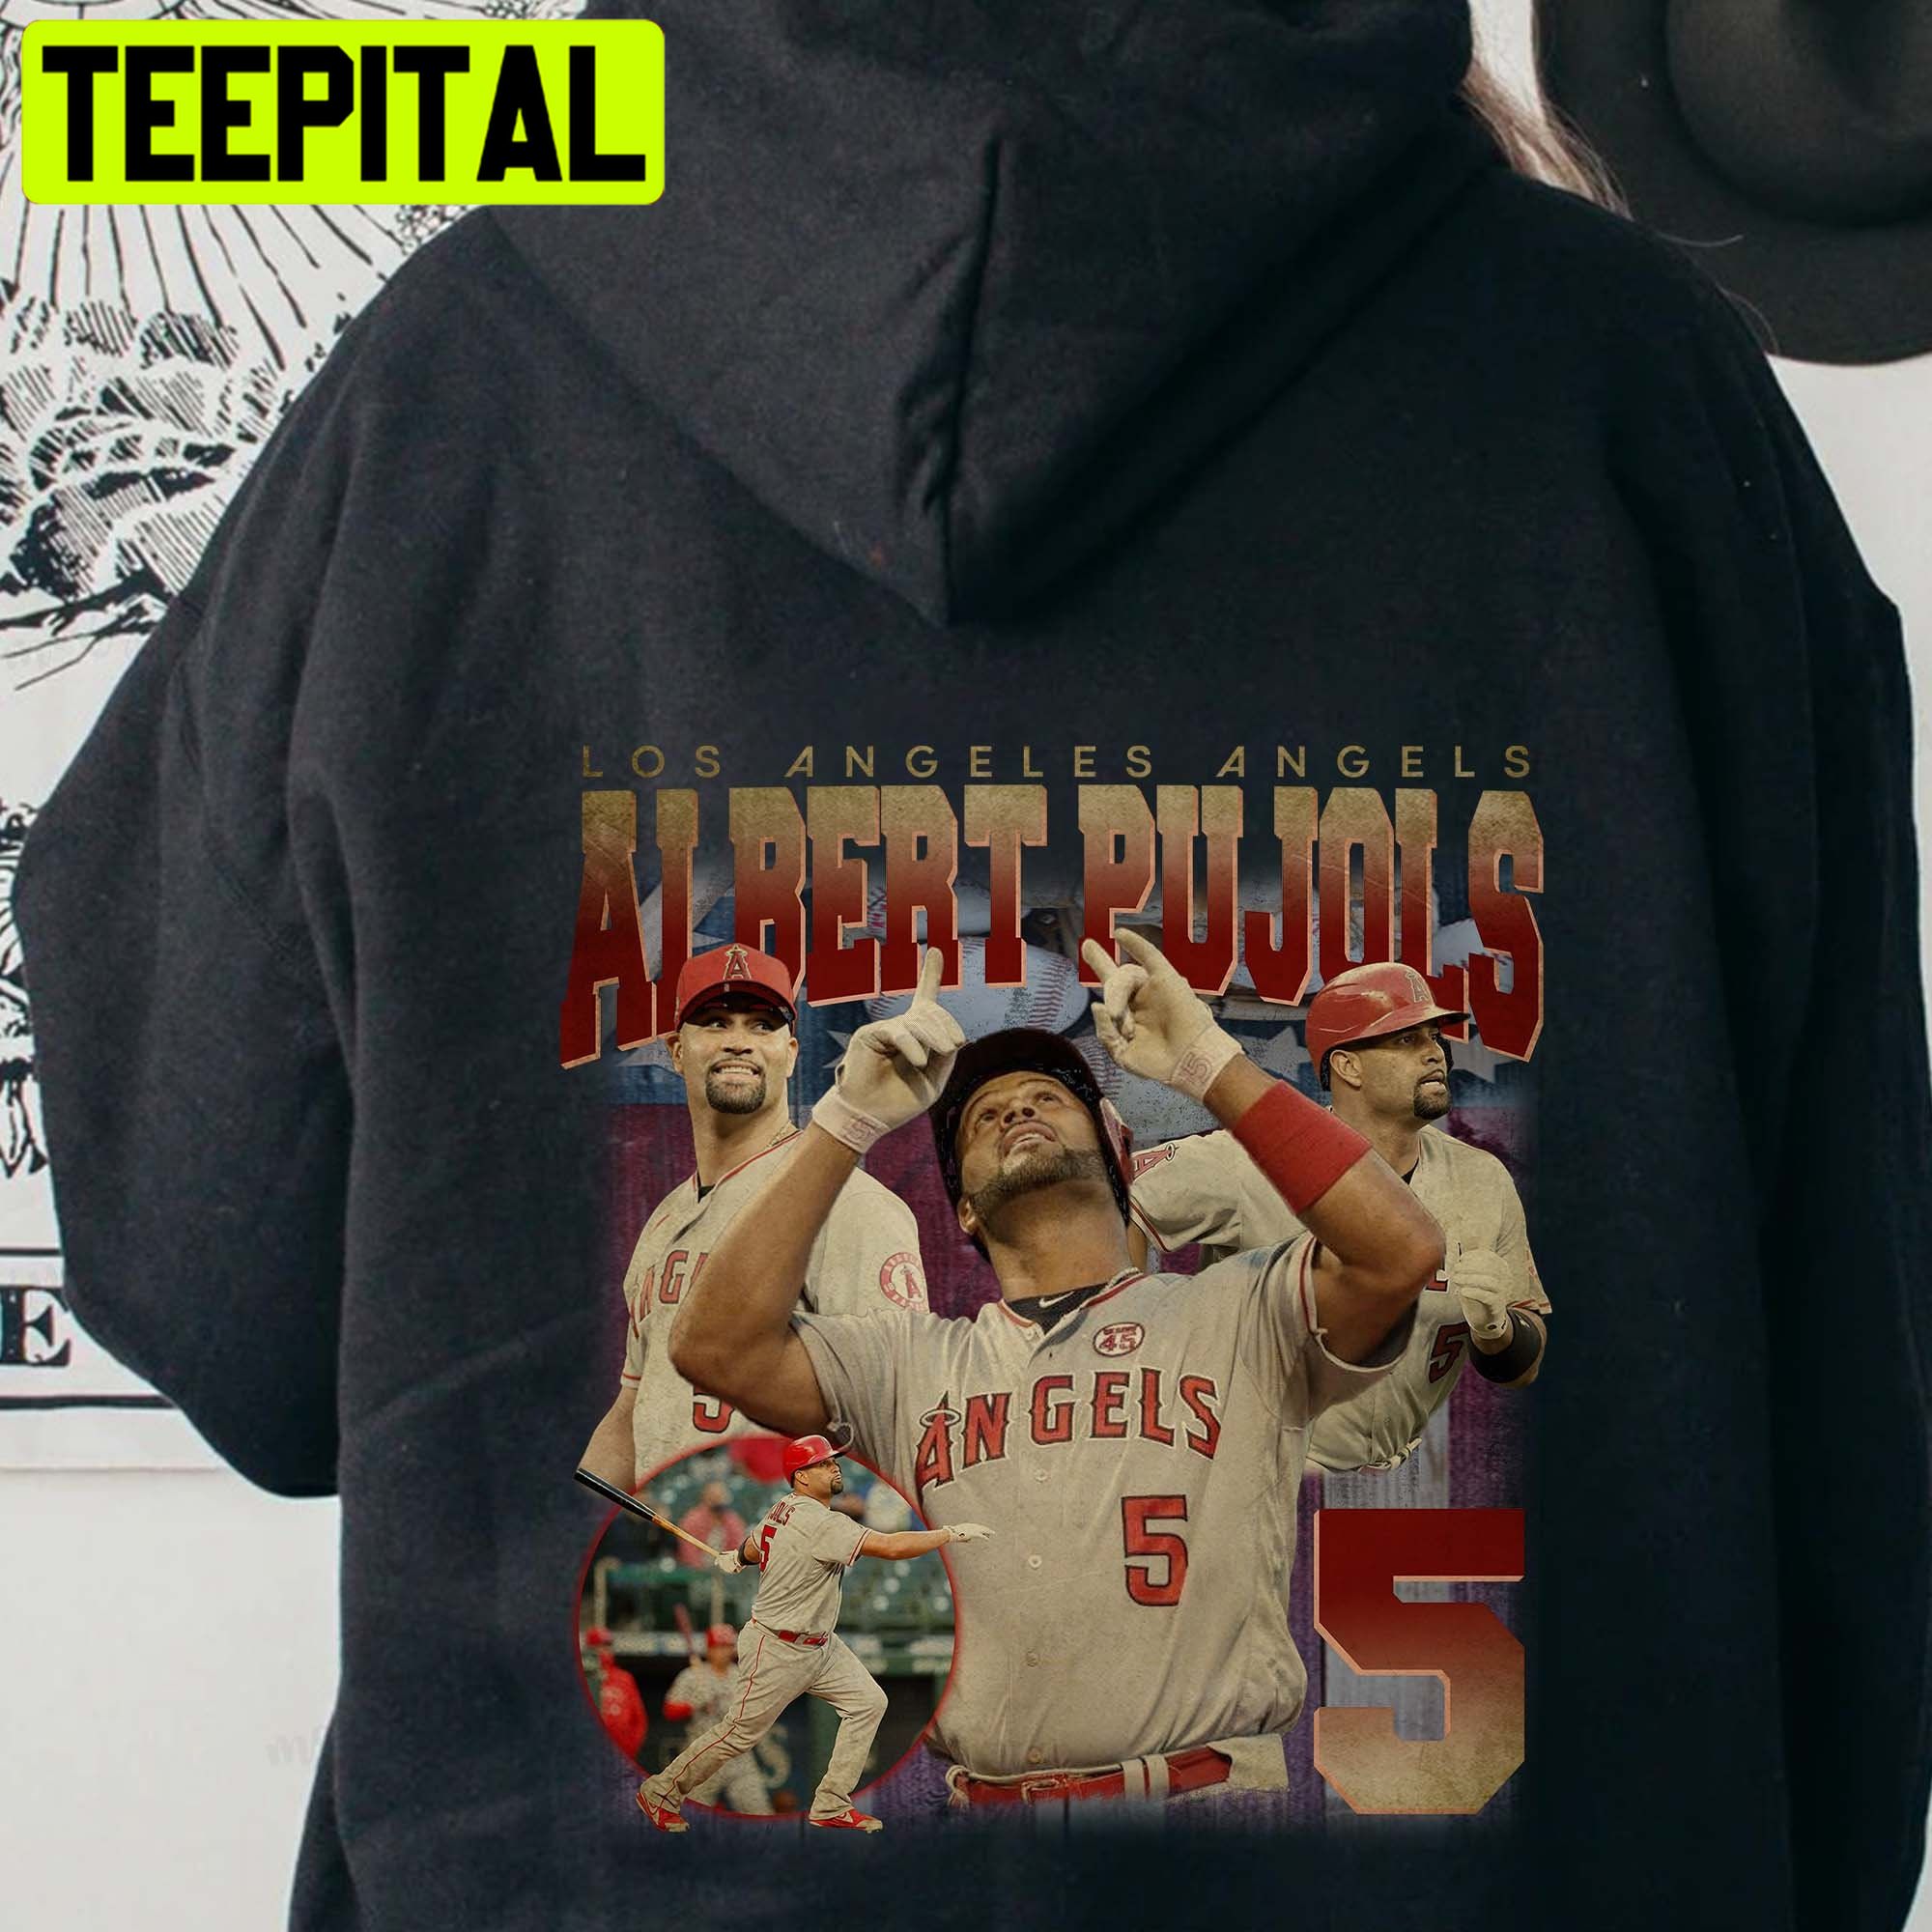 Albert Pujols Vintage 90s Baseball Players Trending Unisex Shirt